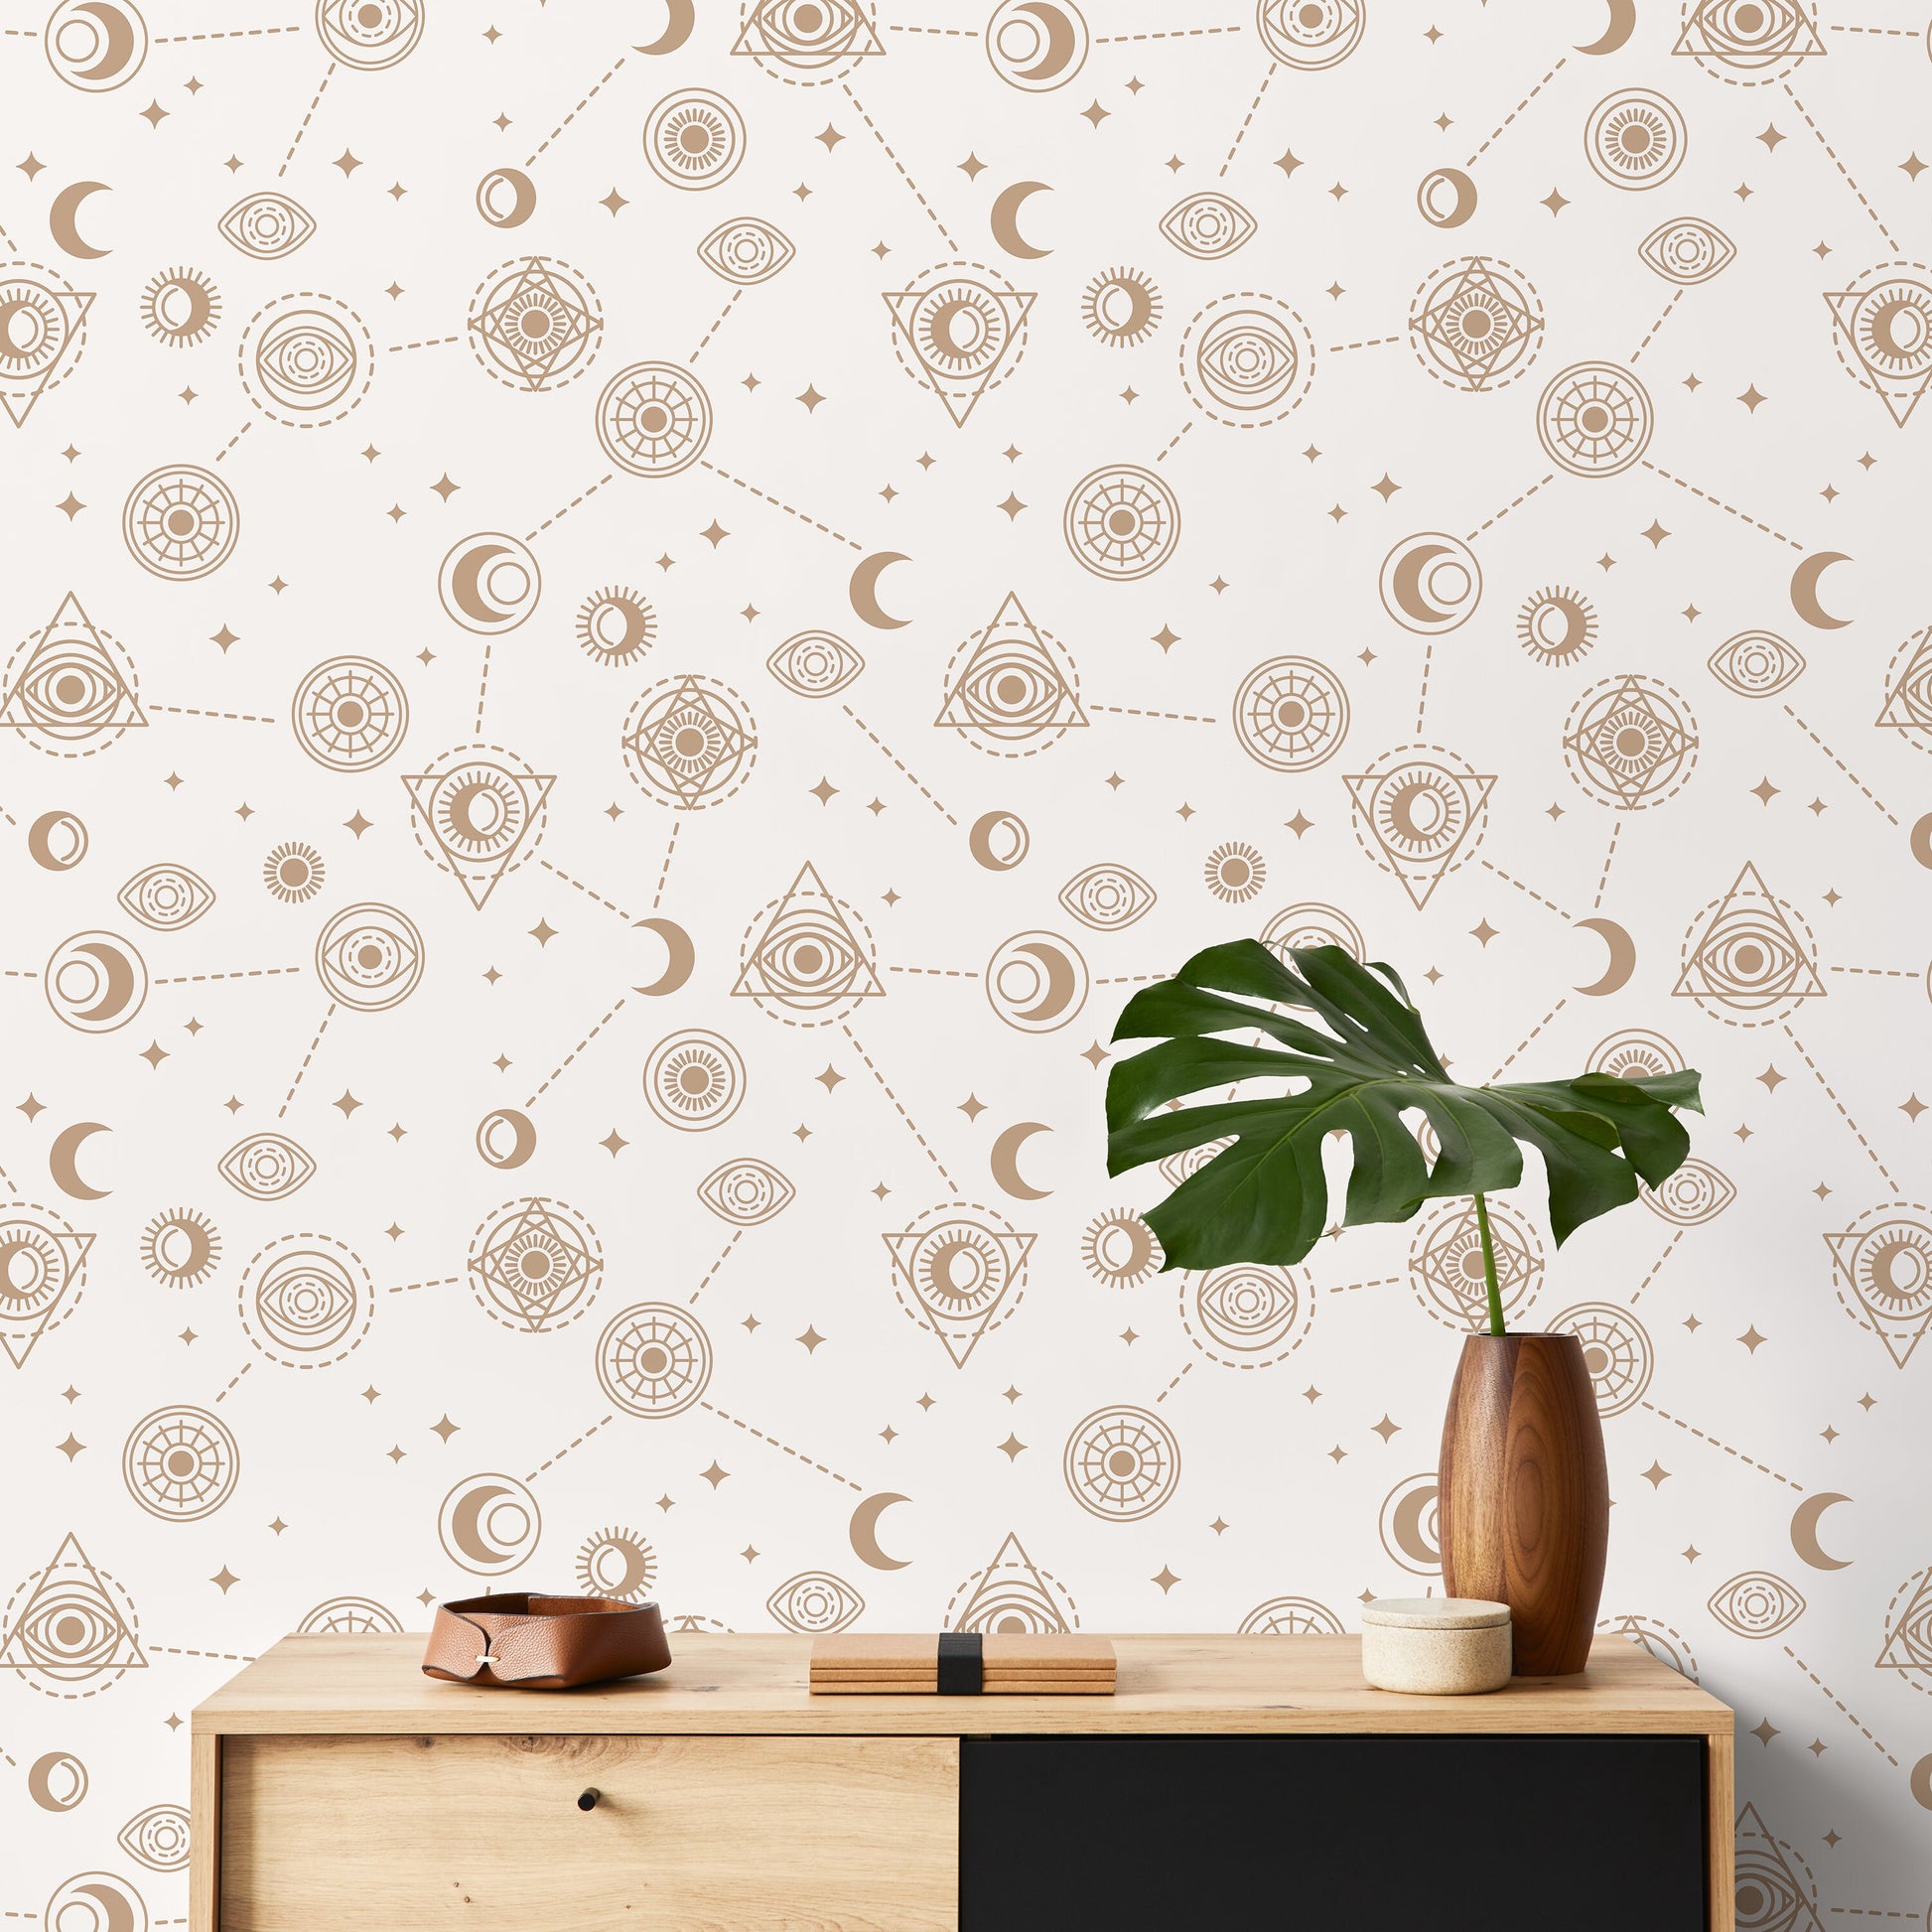 Beige Whimsical Celestial Wallpaper / Peel and Stick Wallpaper Removable Wallpaper Home Decor Wall Art Wall Decor Room Decor - ZAAO